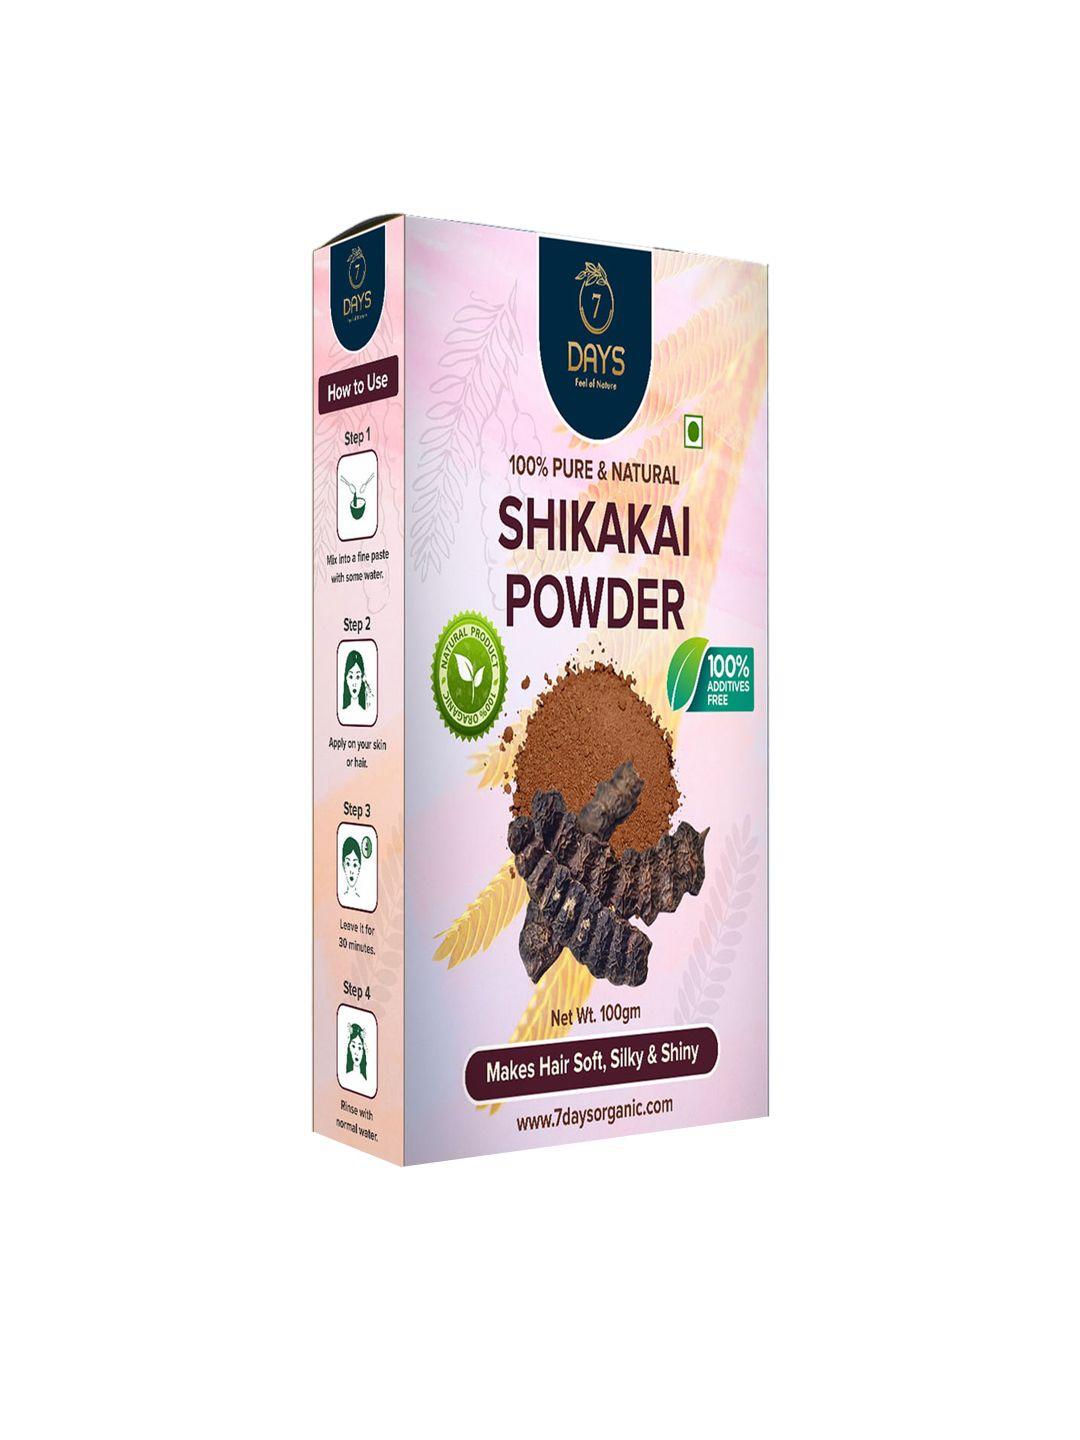 7 days 100% natural & pure shikakai powder for soft & silky hair - 100 g